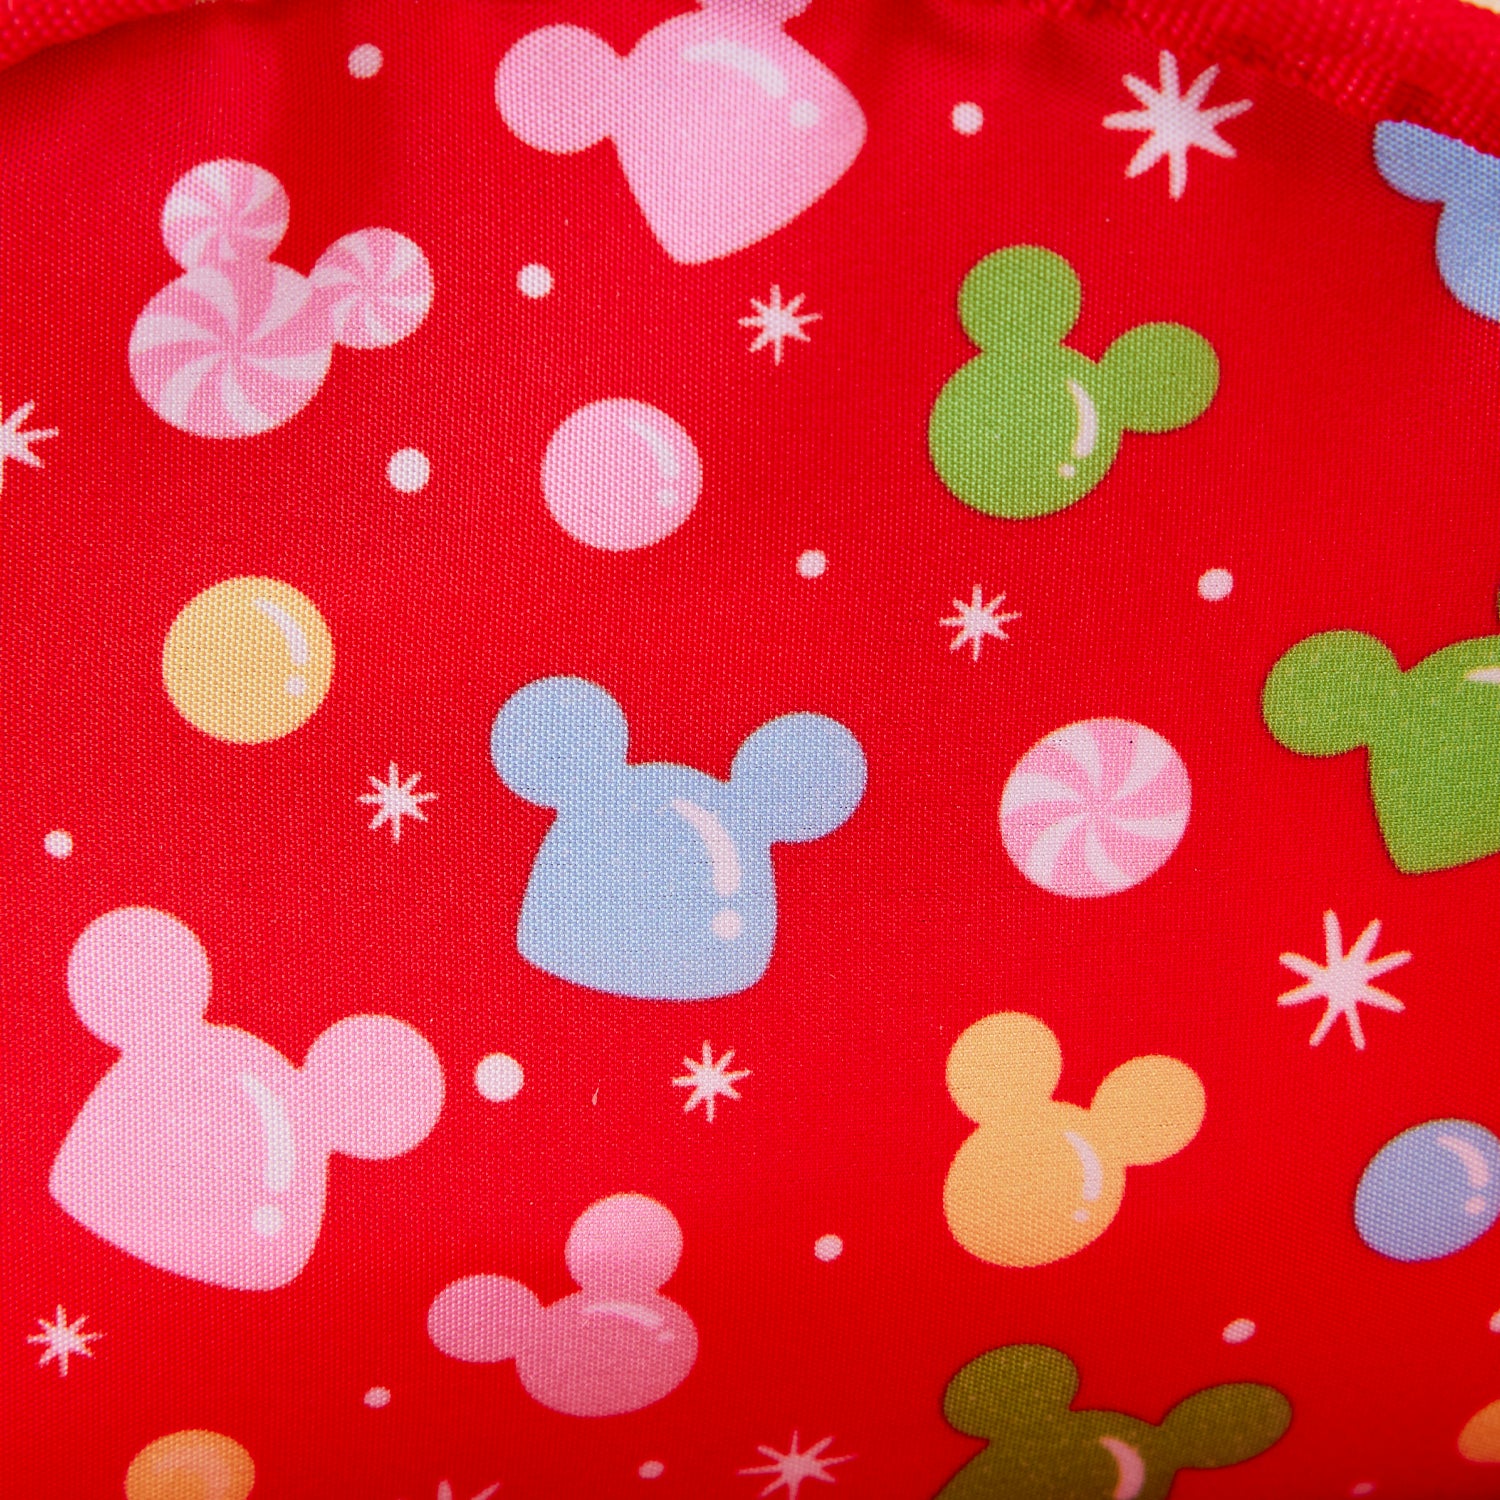 Mickey & Minnie Gingerbread Cookie Crossbody Bag